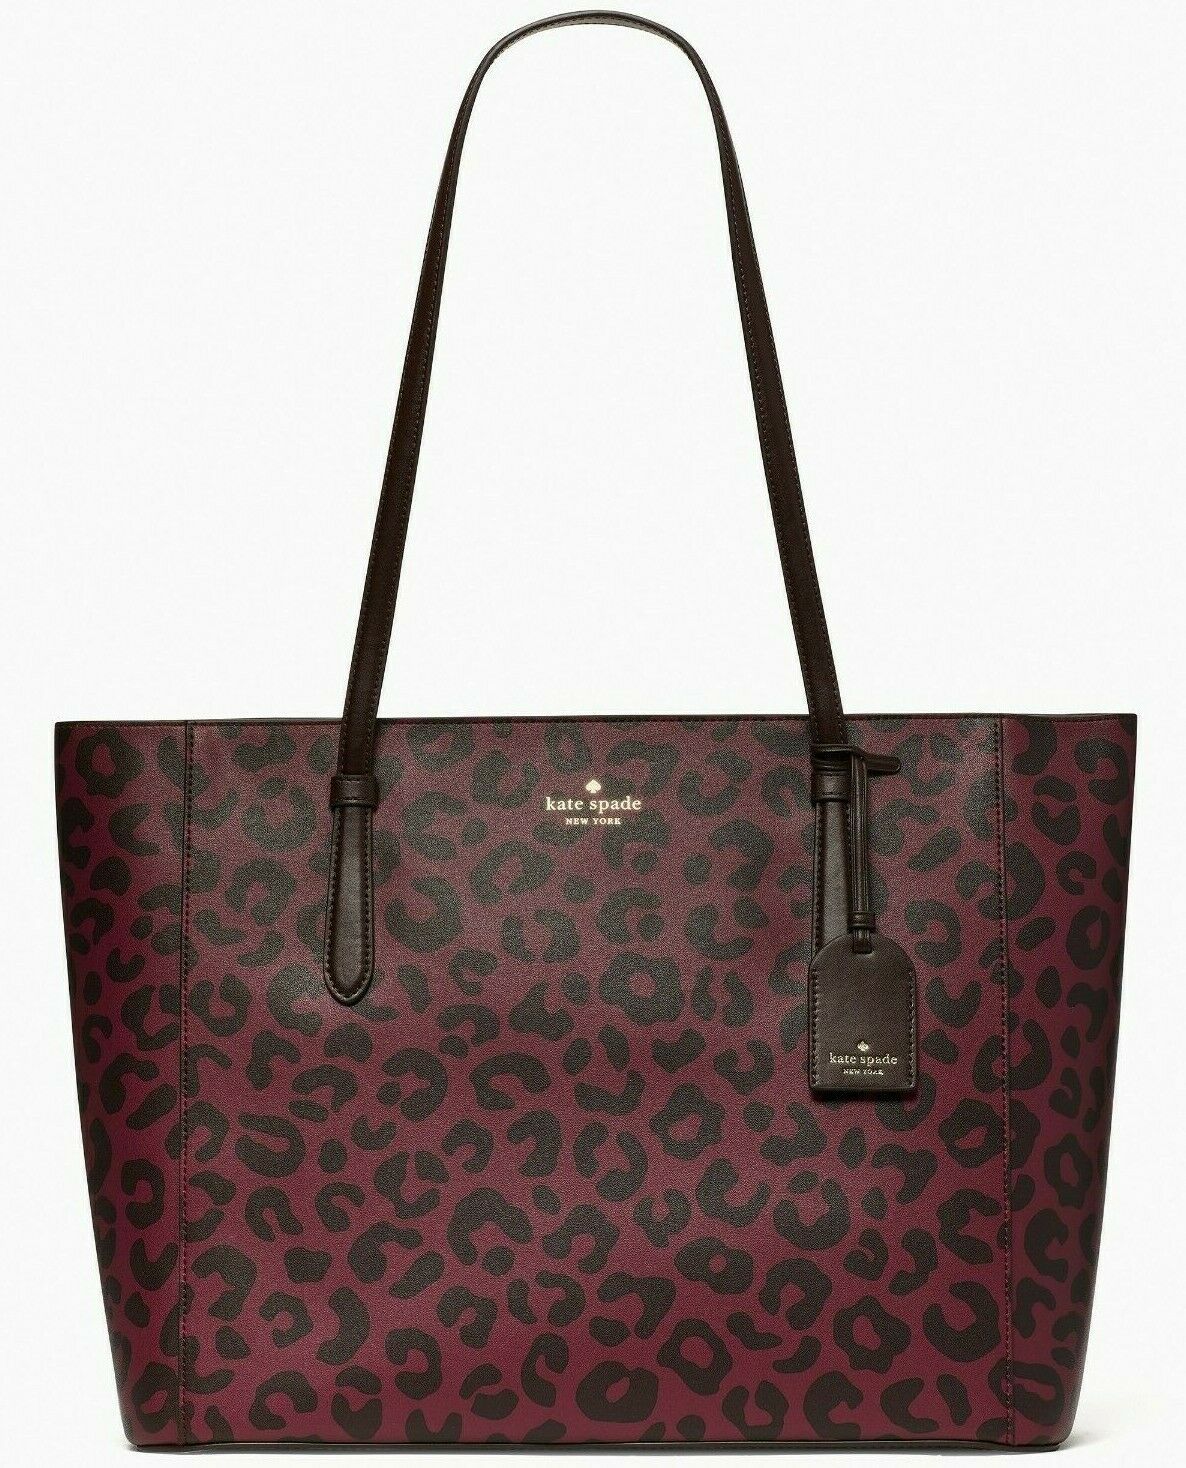 Kate Spade Schuyler Red Leopard Tote Cheetah K4644 Leopardo NWT $329 Retail